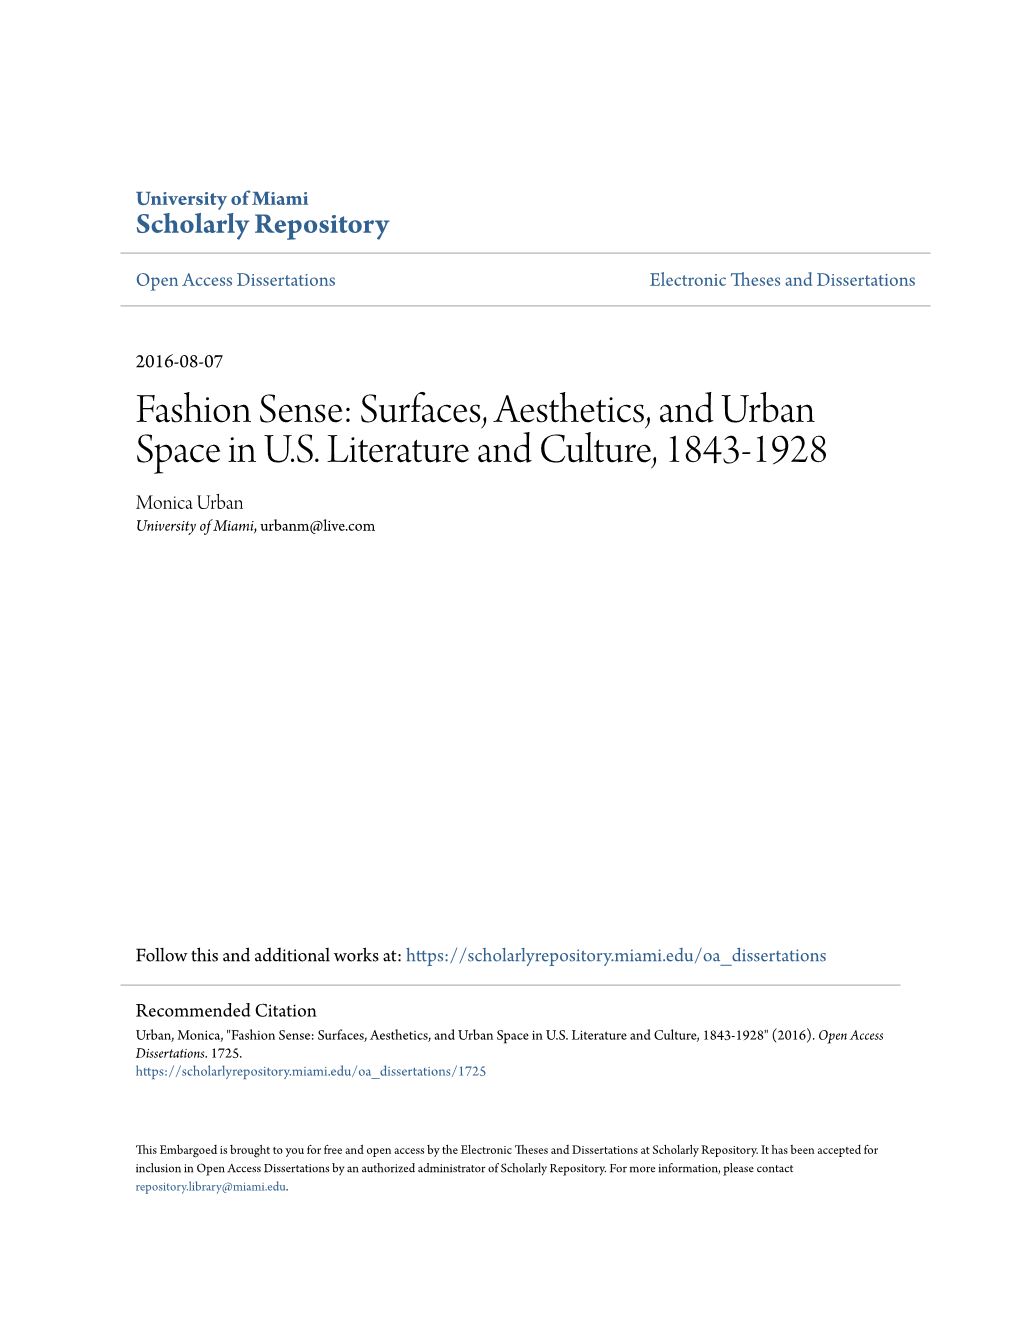 Fashion Sense: Surfaces, Aesthetics, and Urban Space in U.S. Literature and Culture, 1843-1928 Monica Urban University of Miami, Urbanm@Live.Com